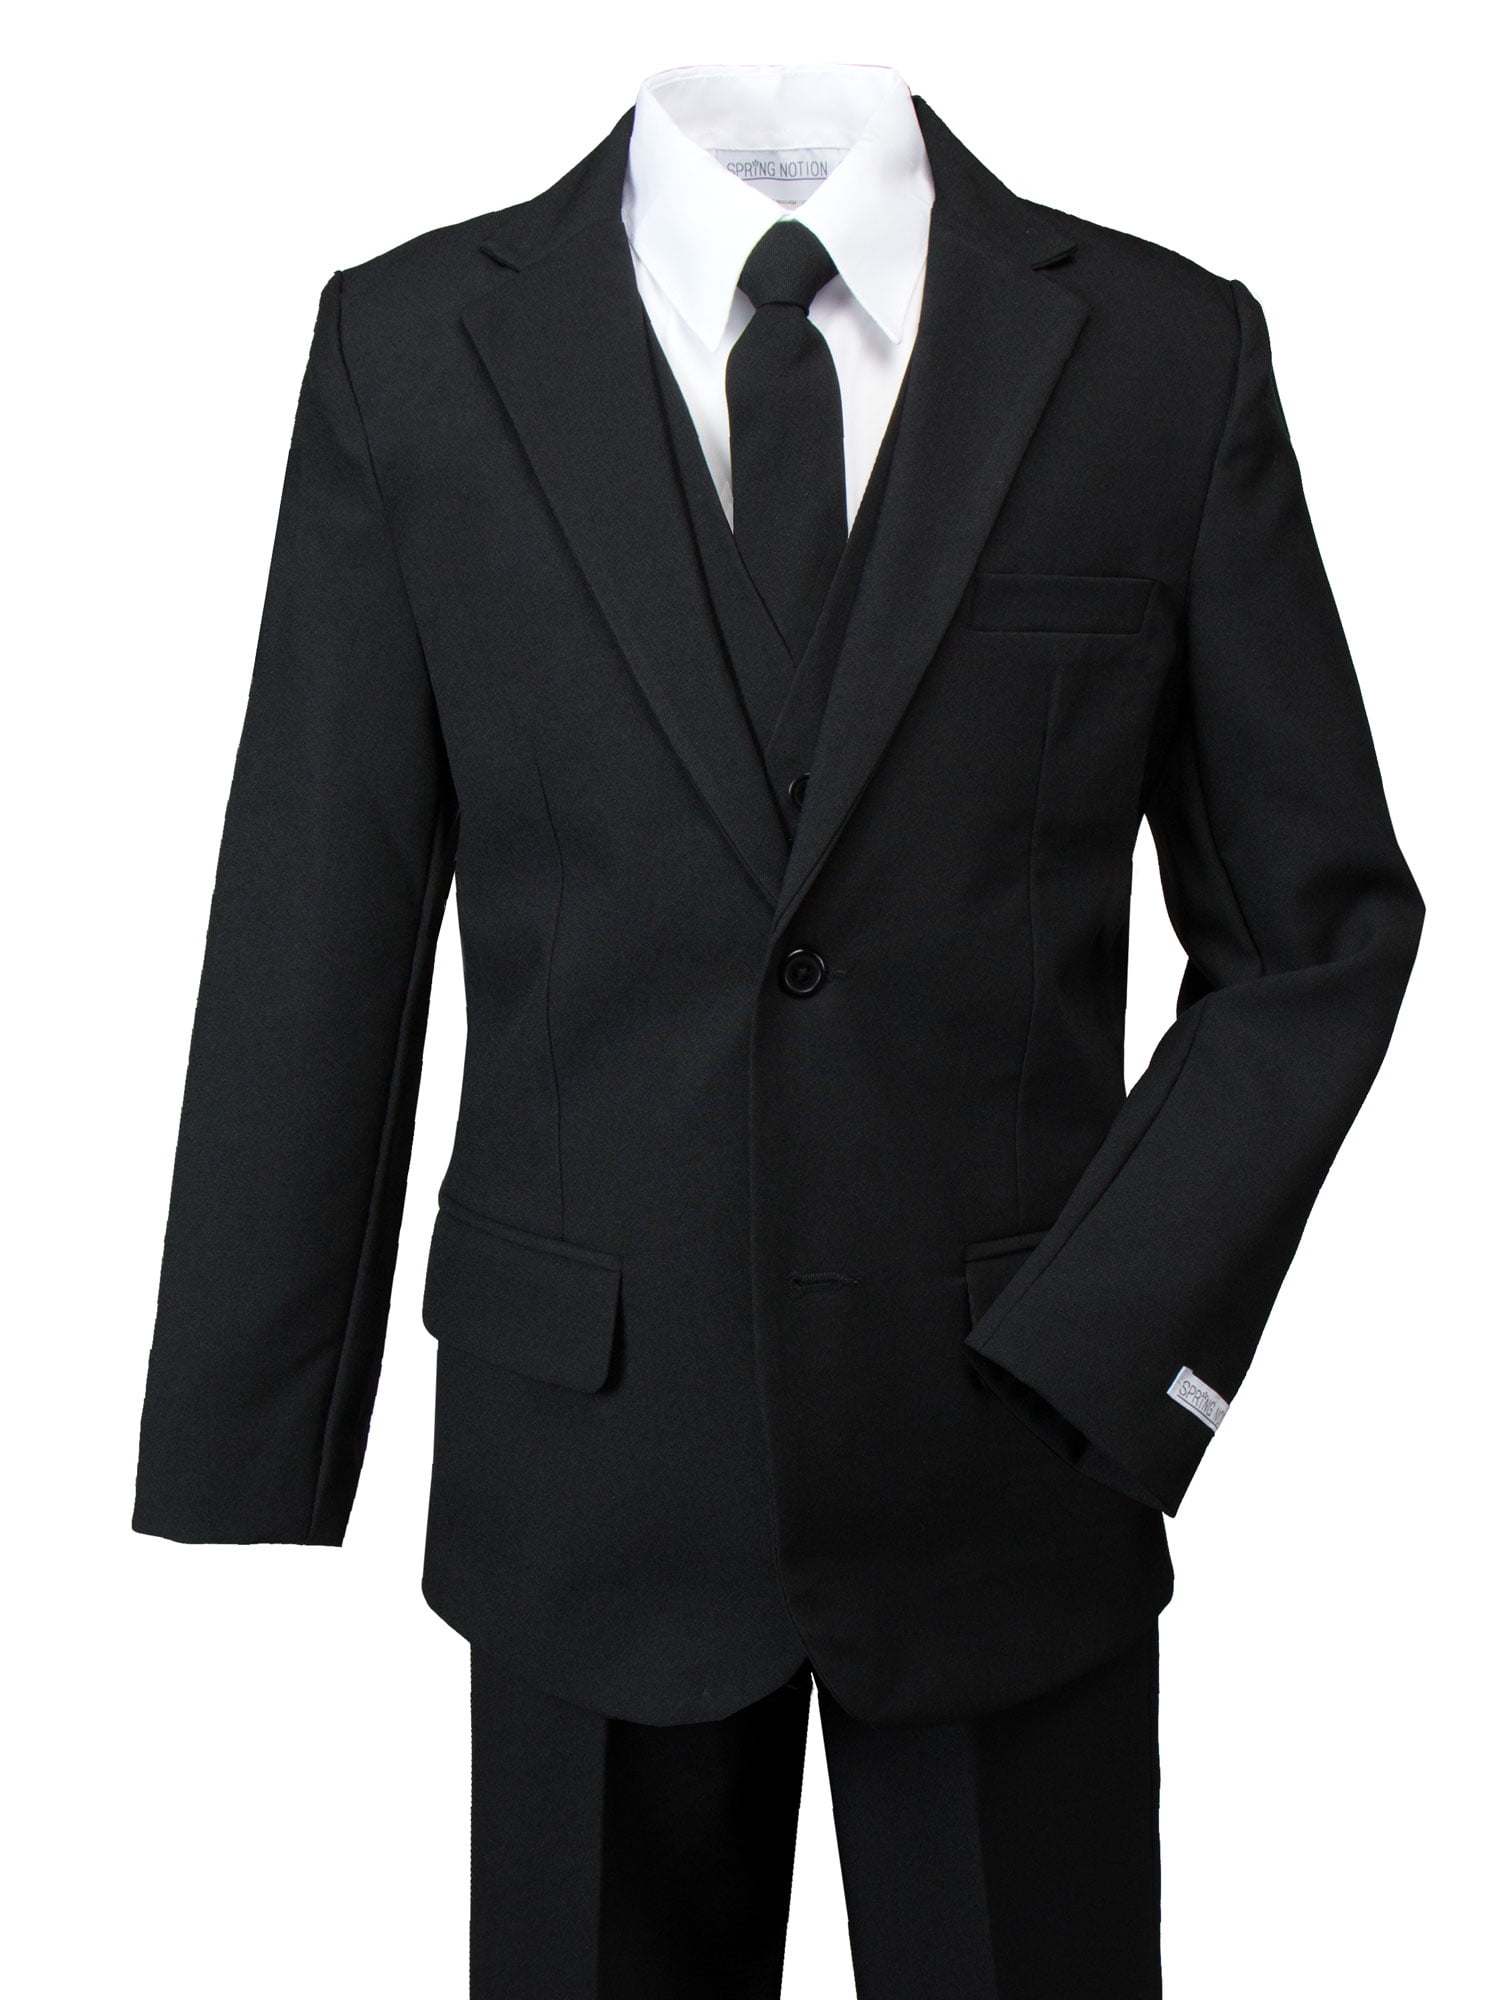 New Boy's Kid's formal Tuxedo Vest Waistcoat & Necktie aqua blue US size 2-14 